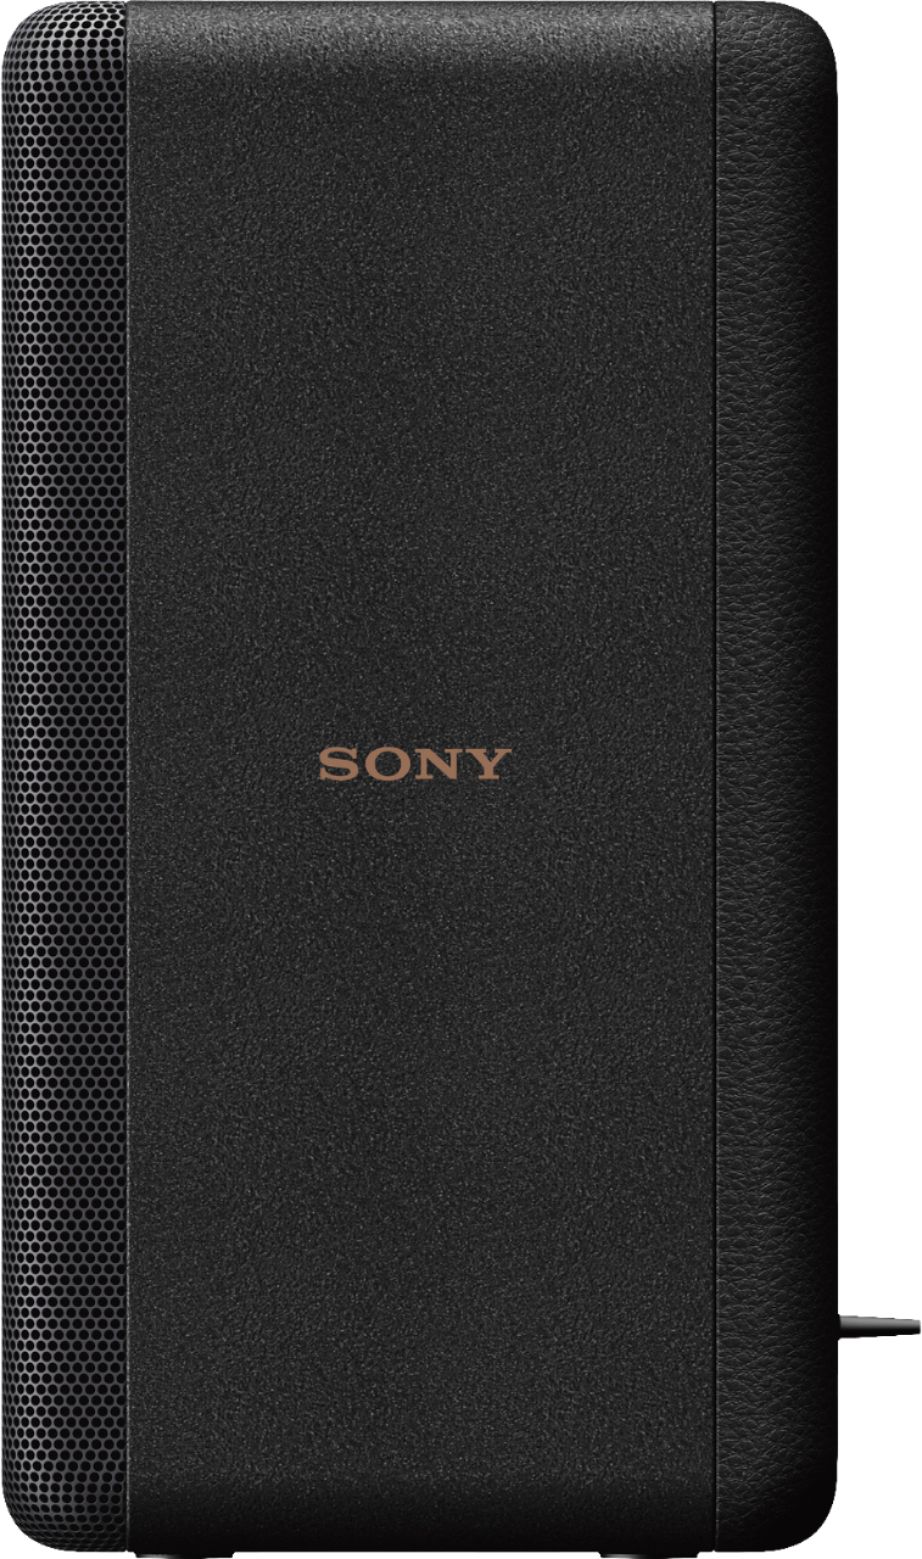 - SARS3S Best SA-RS3S Black Rear Wireless Speaker Buy Sony